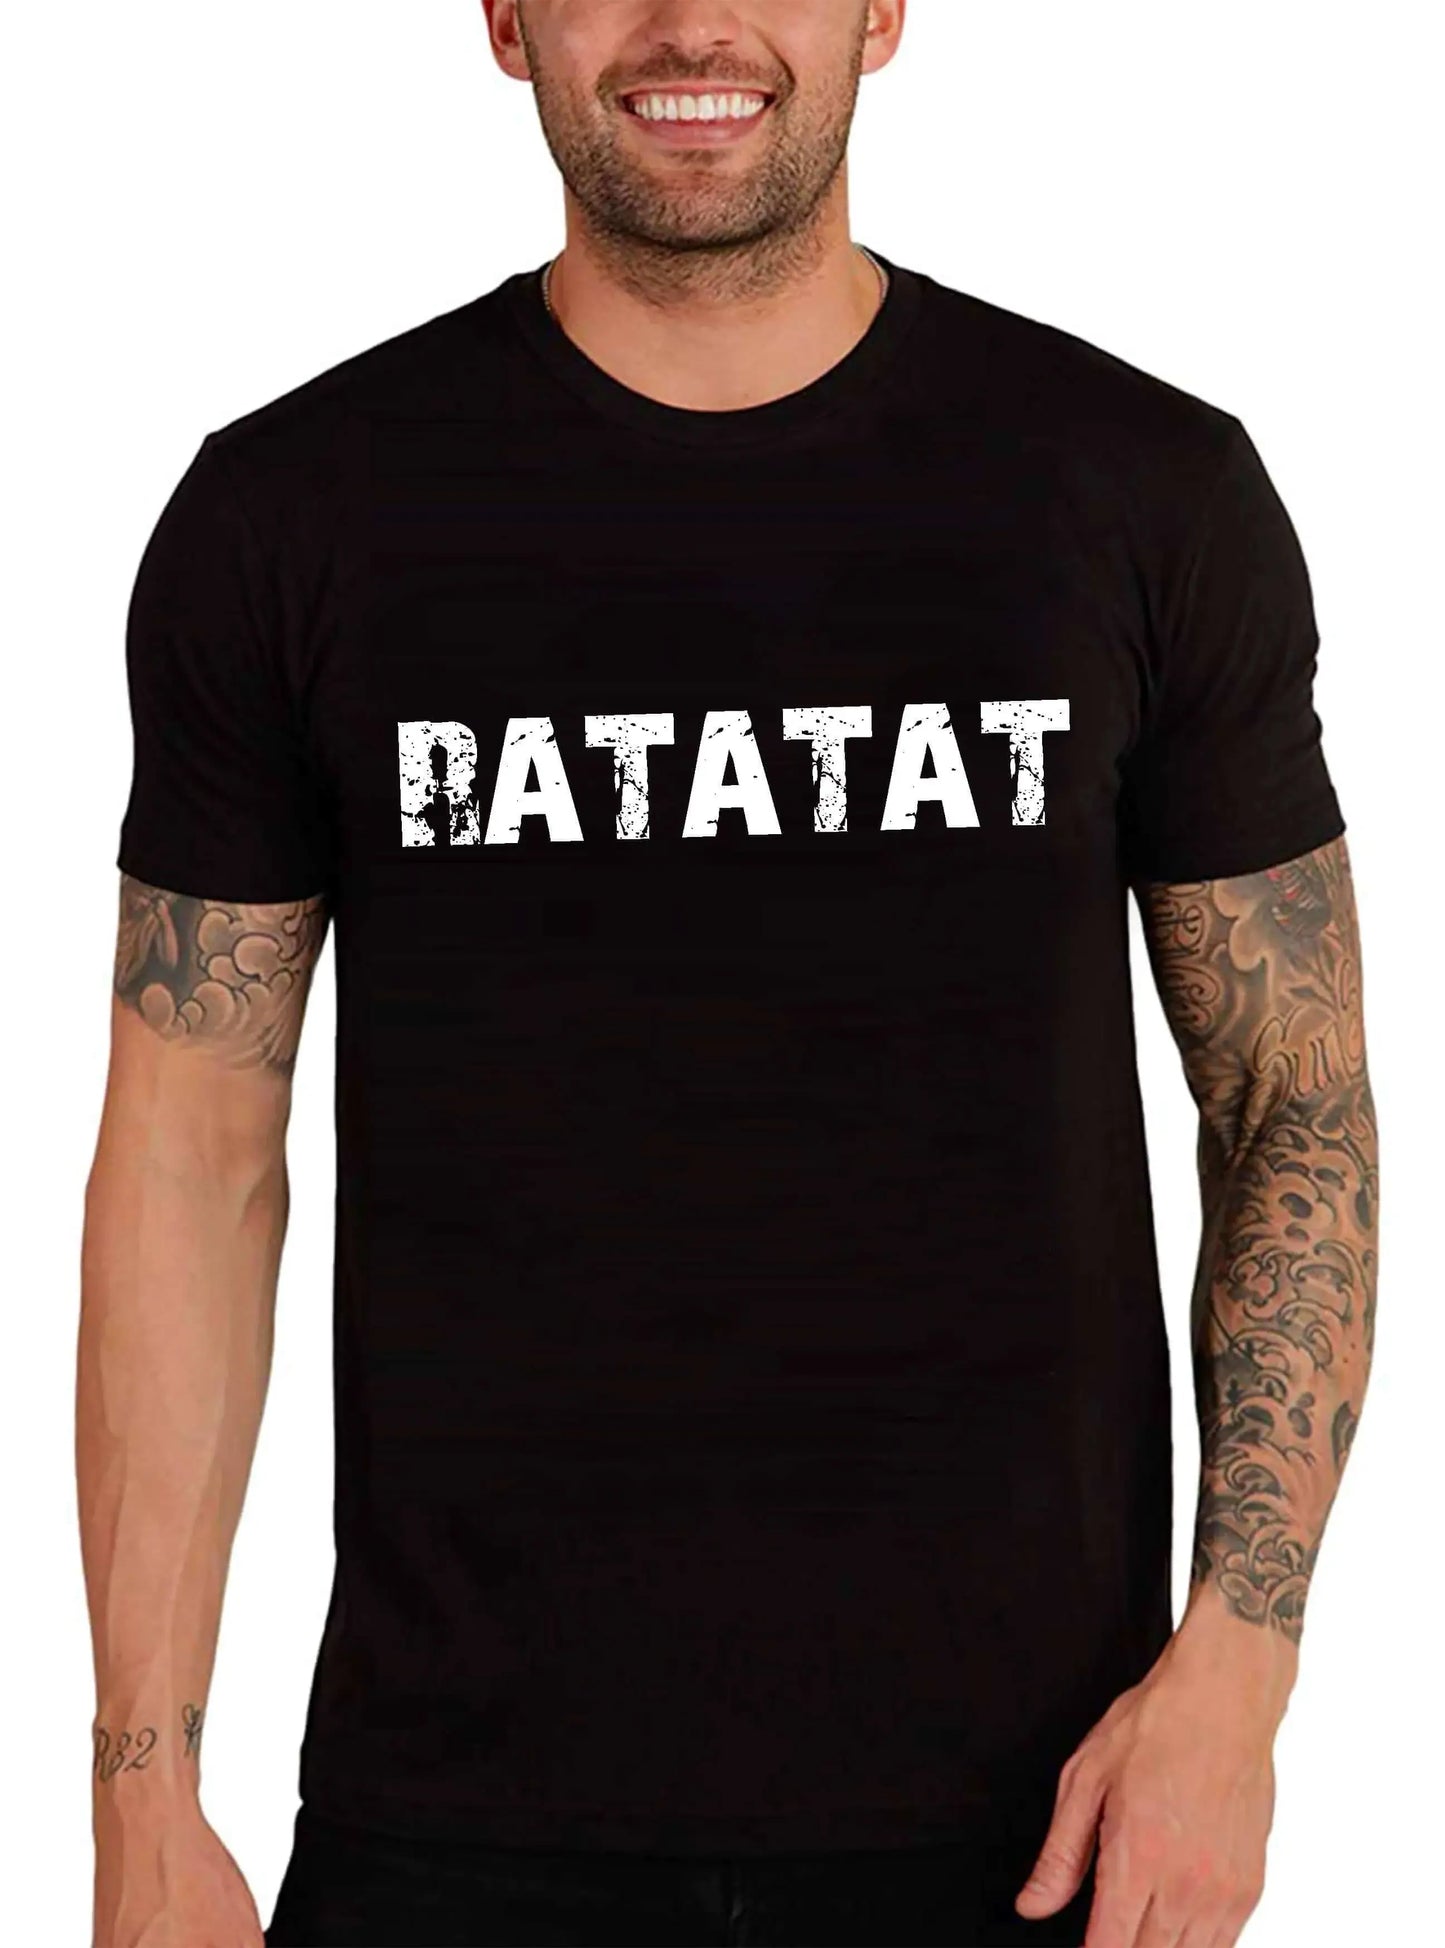 Men's Graphic T-Shirt Ratatat Eco-Friendly Limited Edition Short Sleeve Tee-Shirt Vintage Birthday Gift Novelty